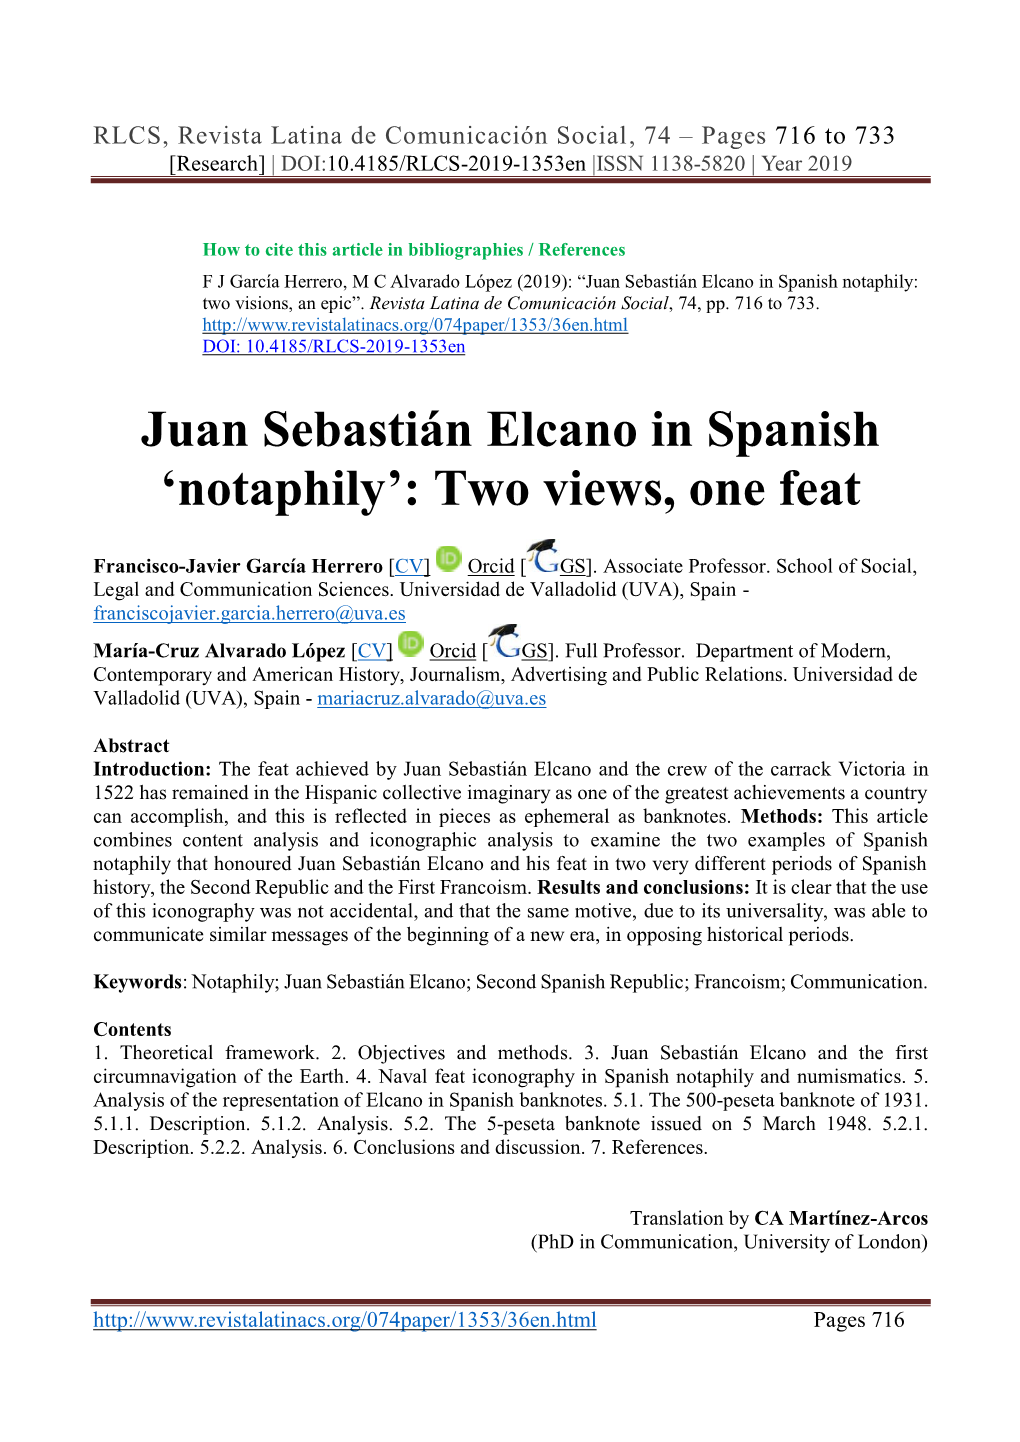 Juan Sebastián Elcano in Spanish 'Notaphily': Two Views, One Feat